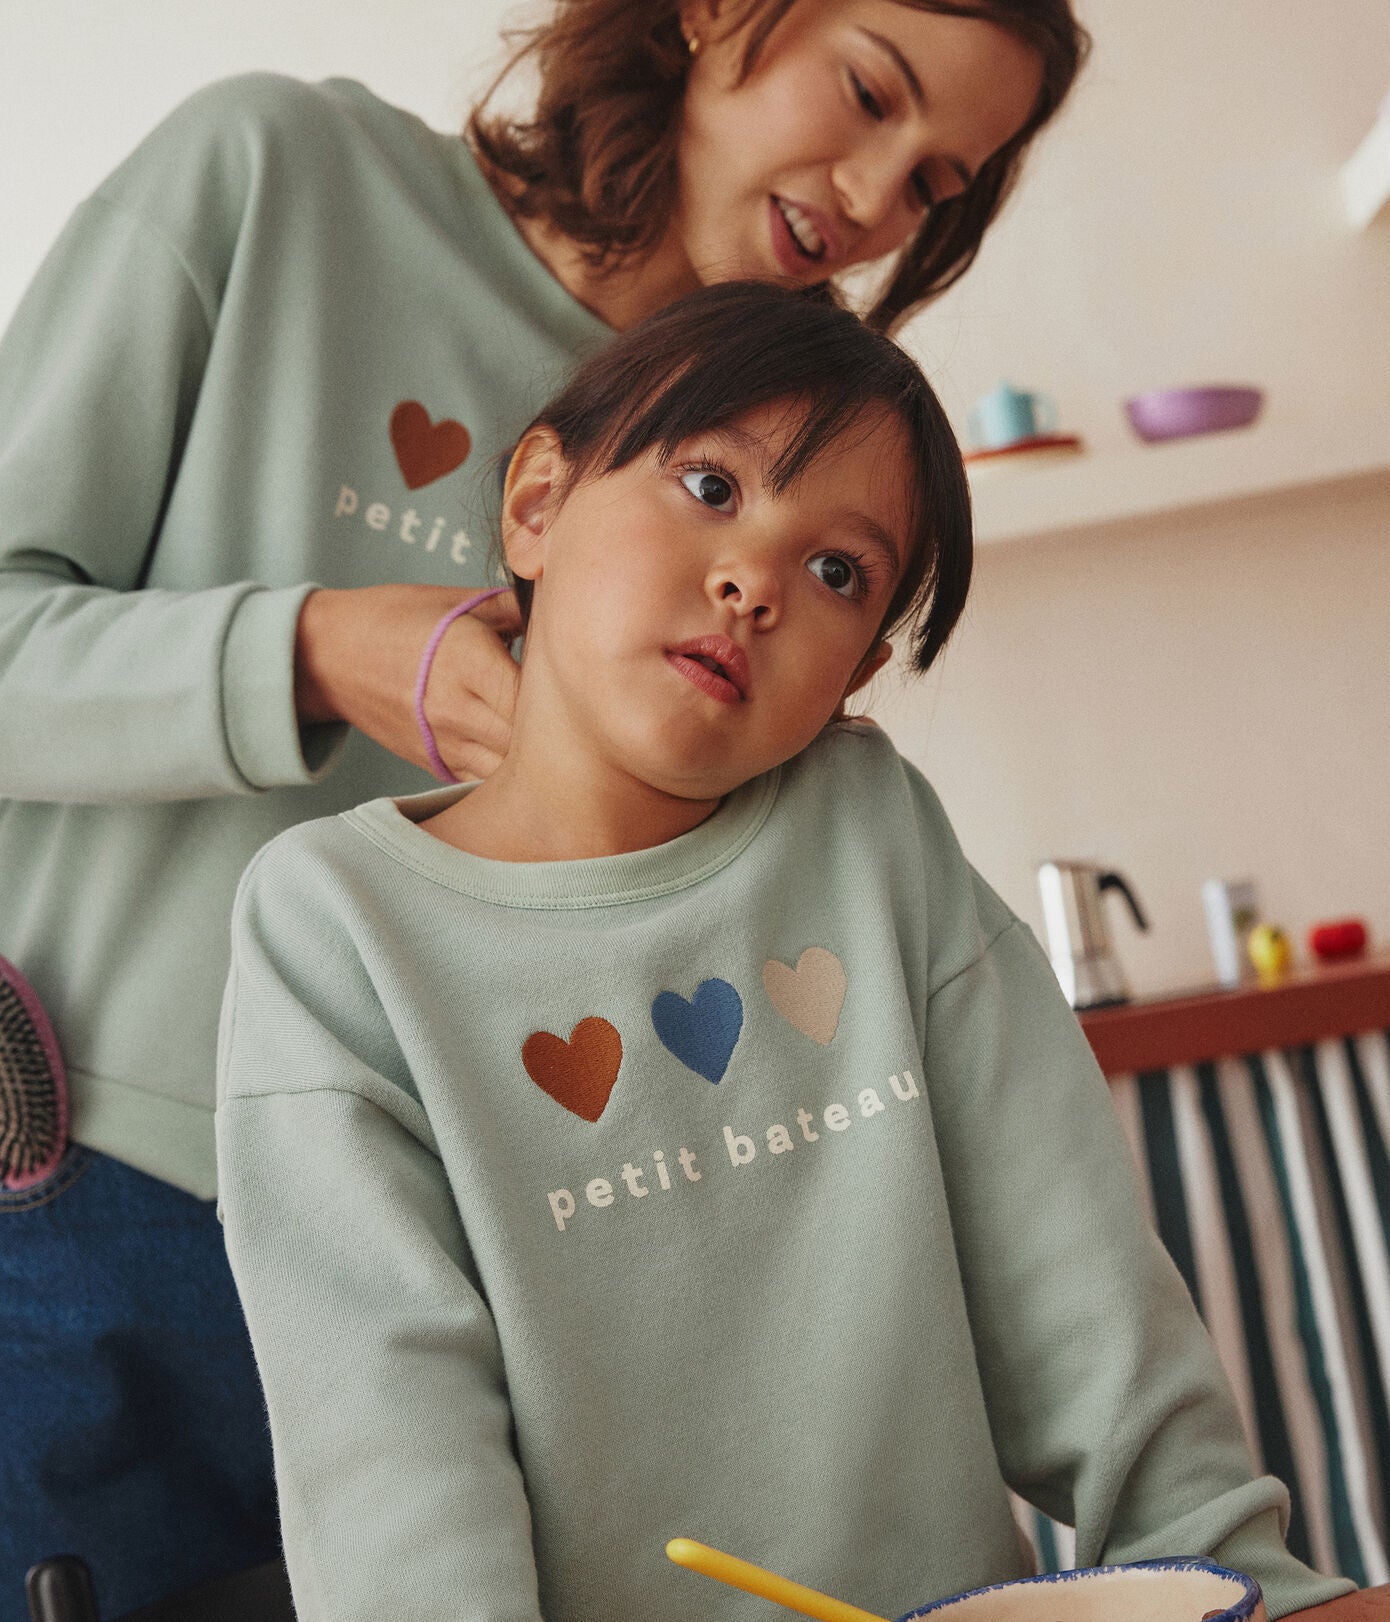 Petit Bateau - Sweatshirt Heart (Child)